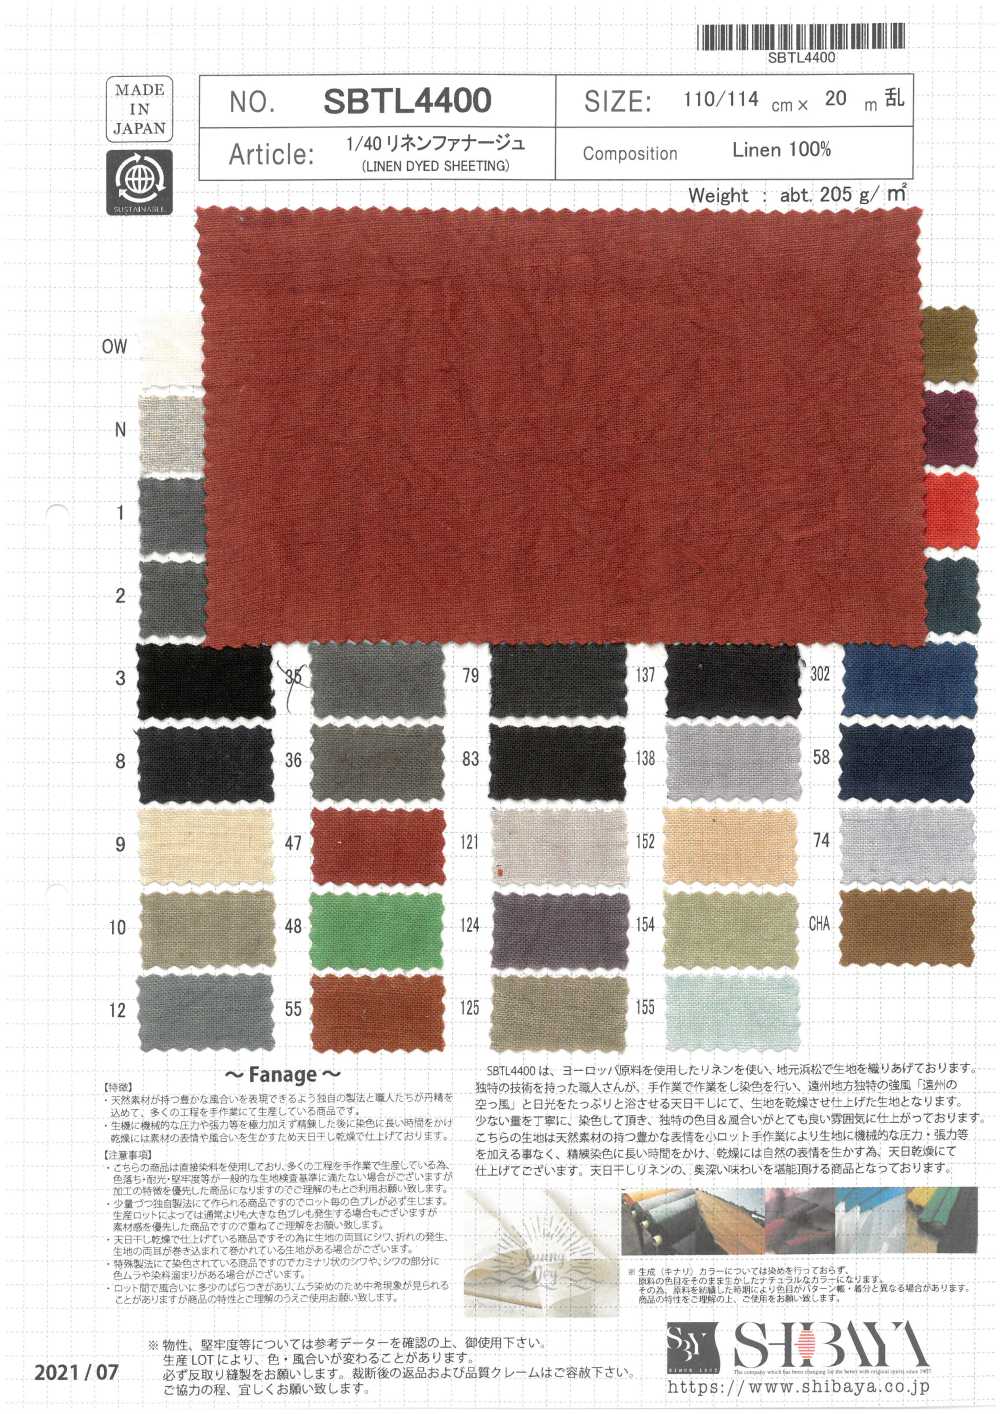 SBTL4400 1/40 Leinen Fanage[Textilgewebe] SHIBAYA